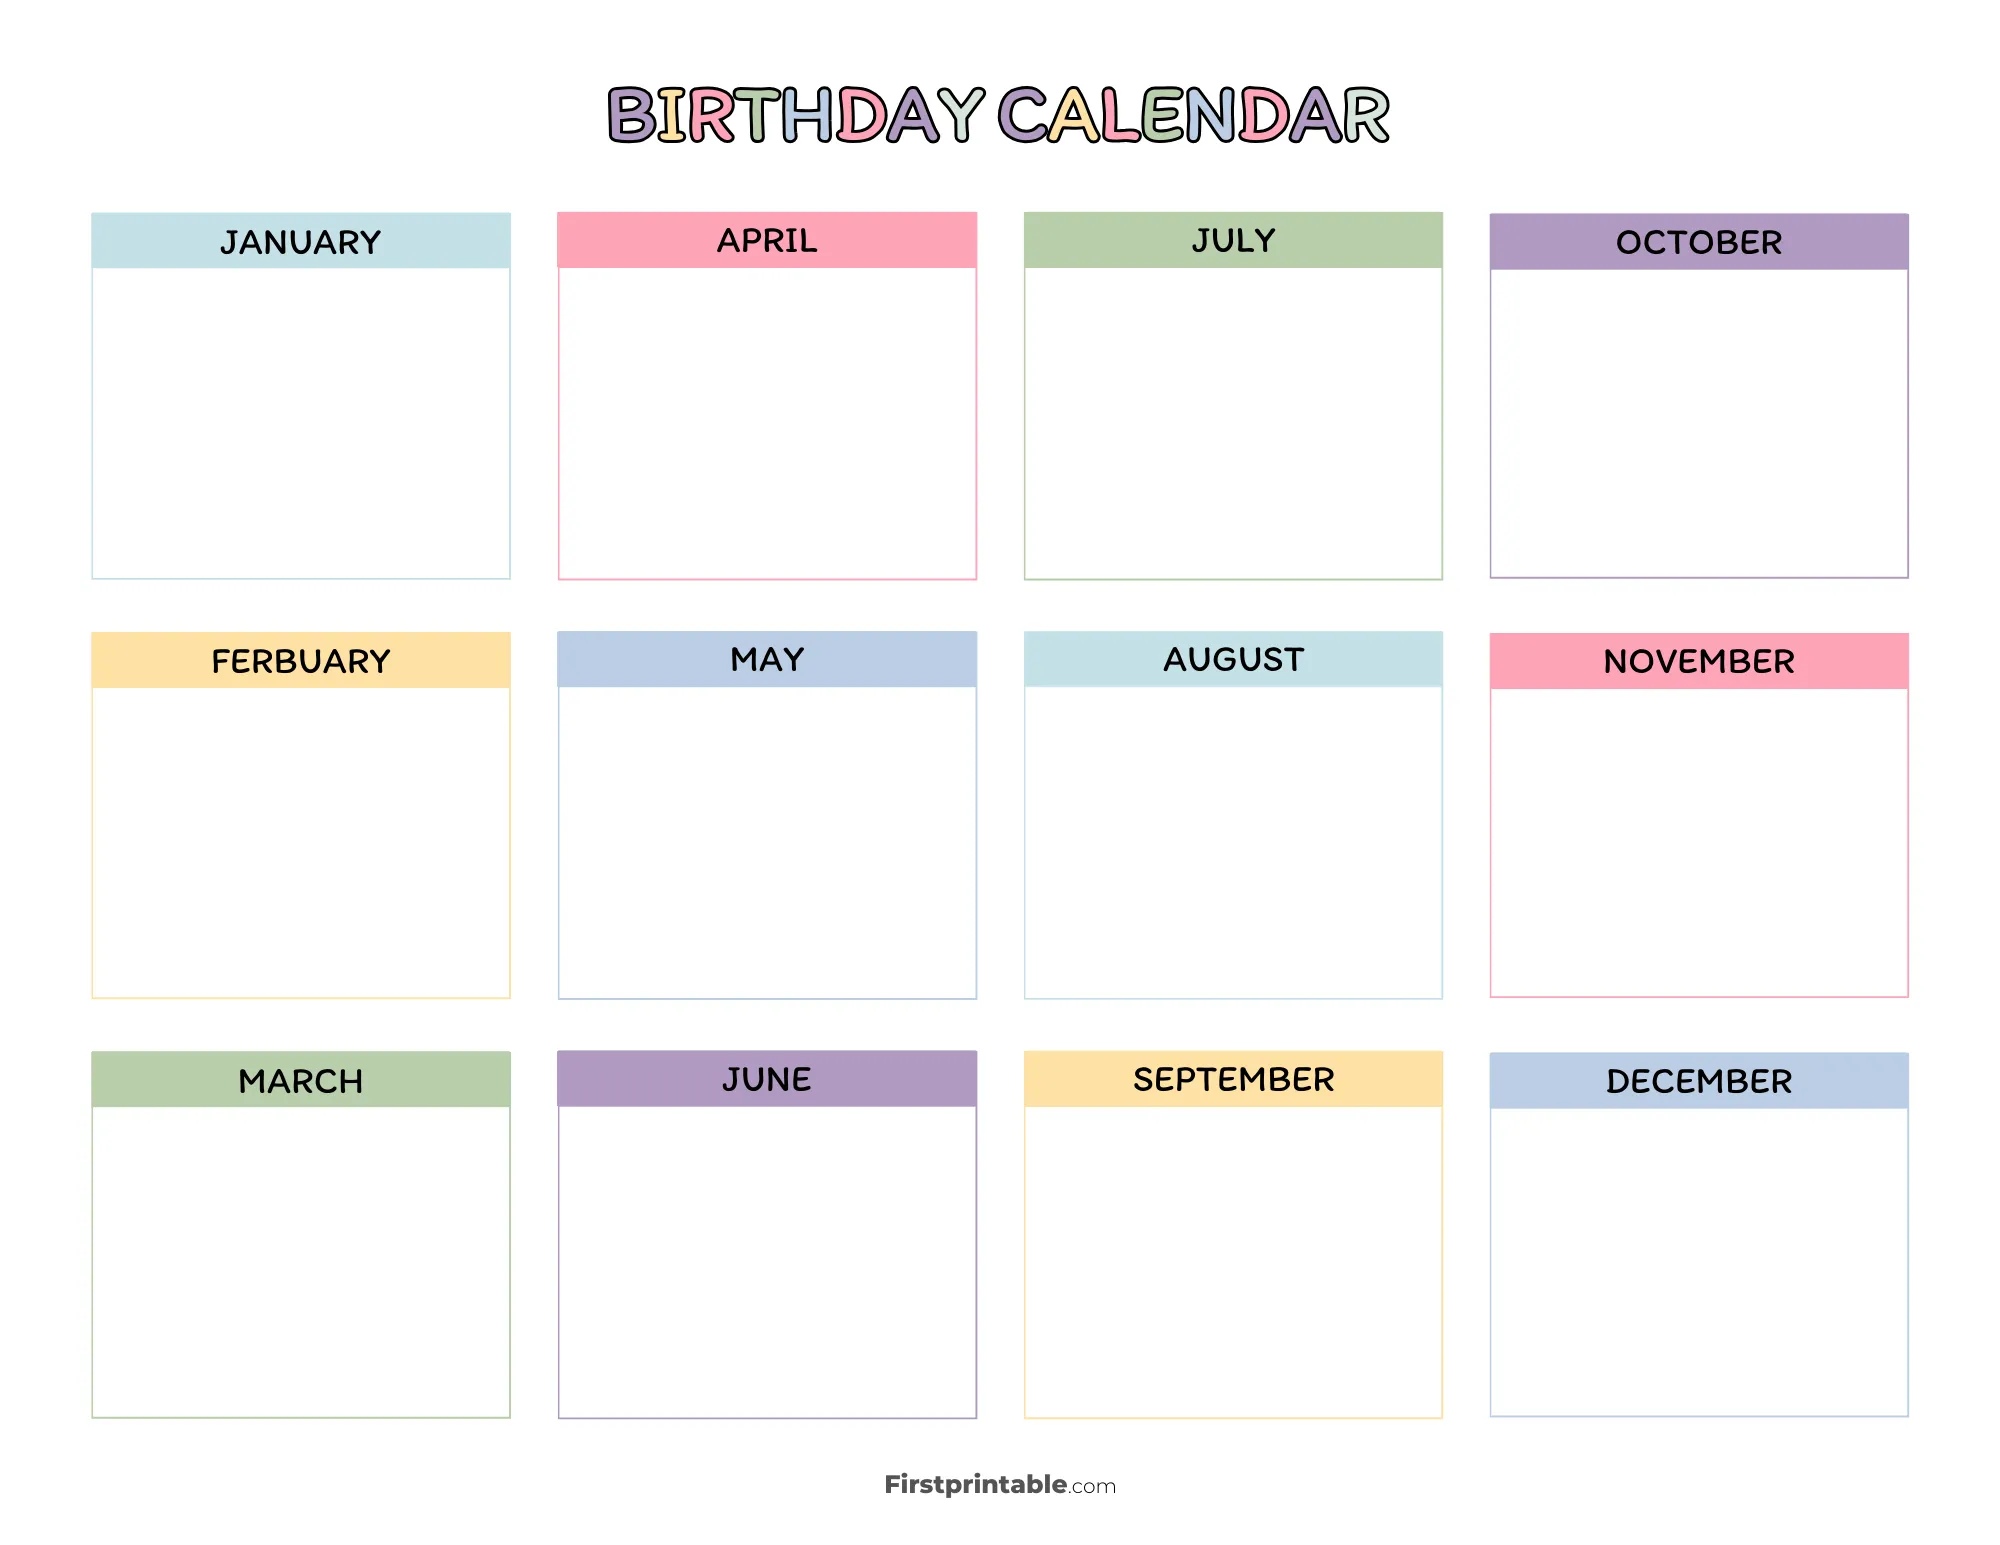 Birthday Calendar Printable Template 25